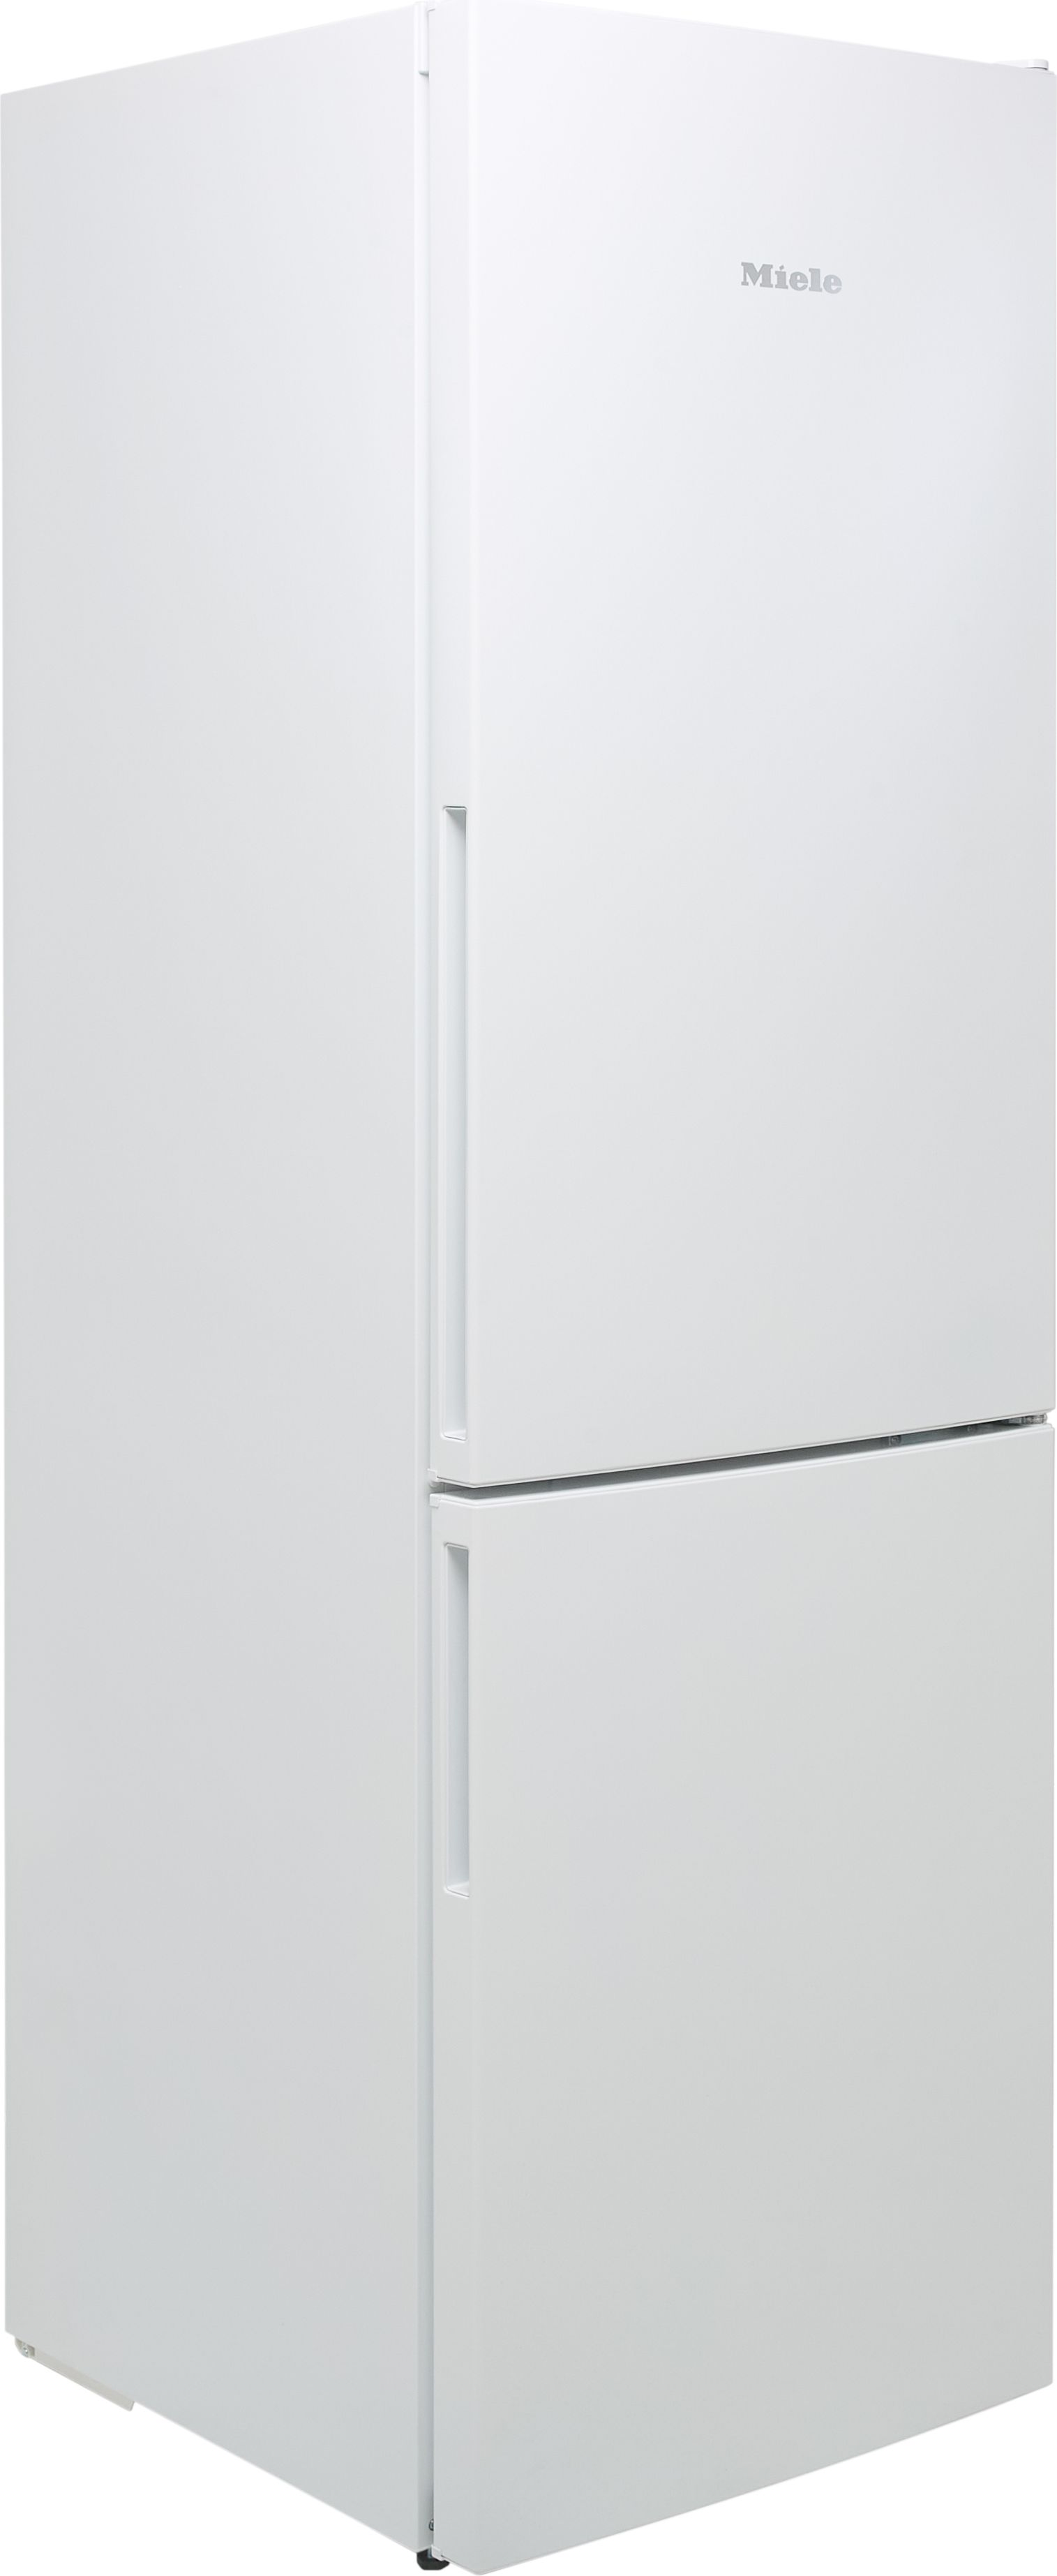 Miele ACTIVE KD4072E 60/40 Fridge Freezer - White - E Rated, White